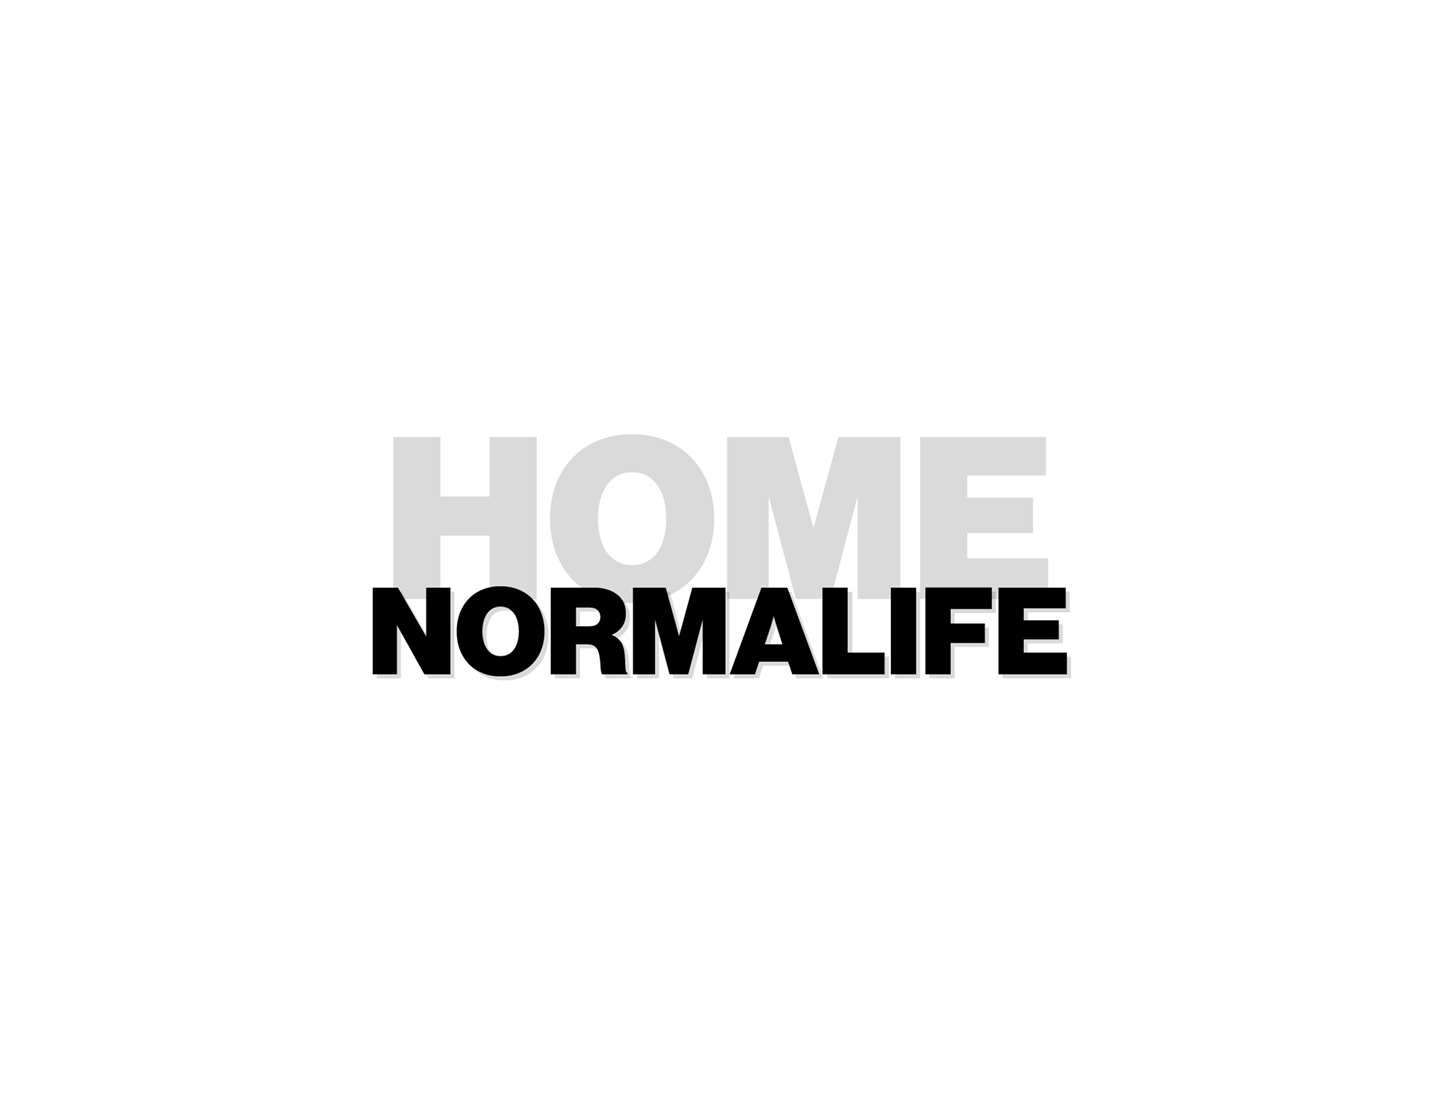 NORMALIFE HOME logo